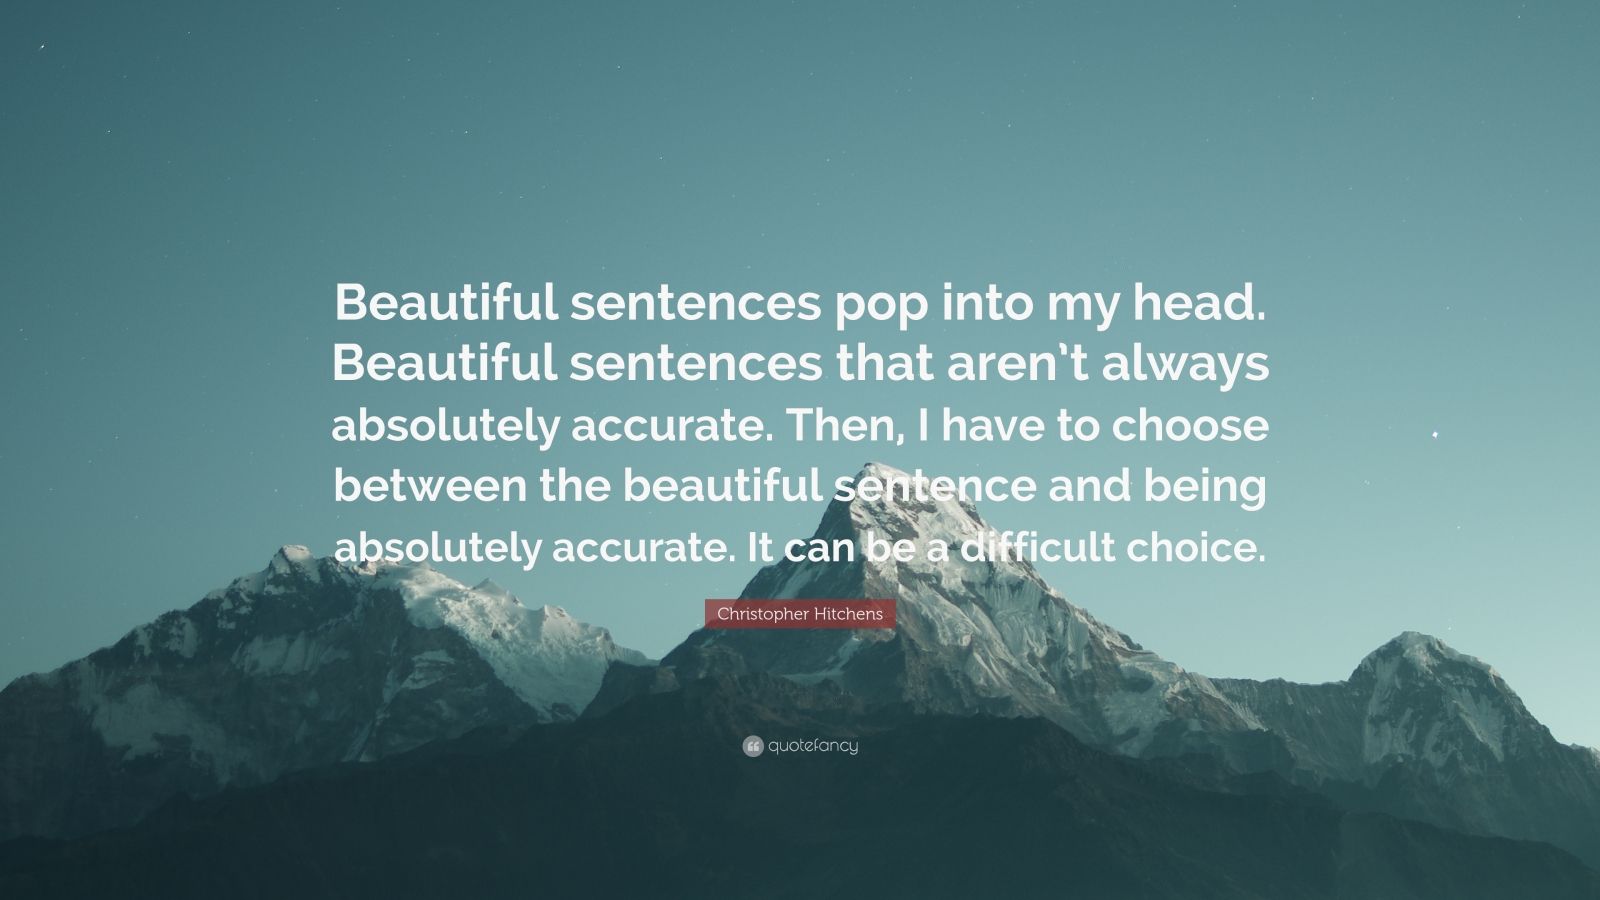 Christopher Hitchens Quote: "Beautiful sentences pop into ...